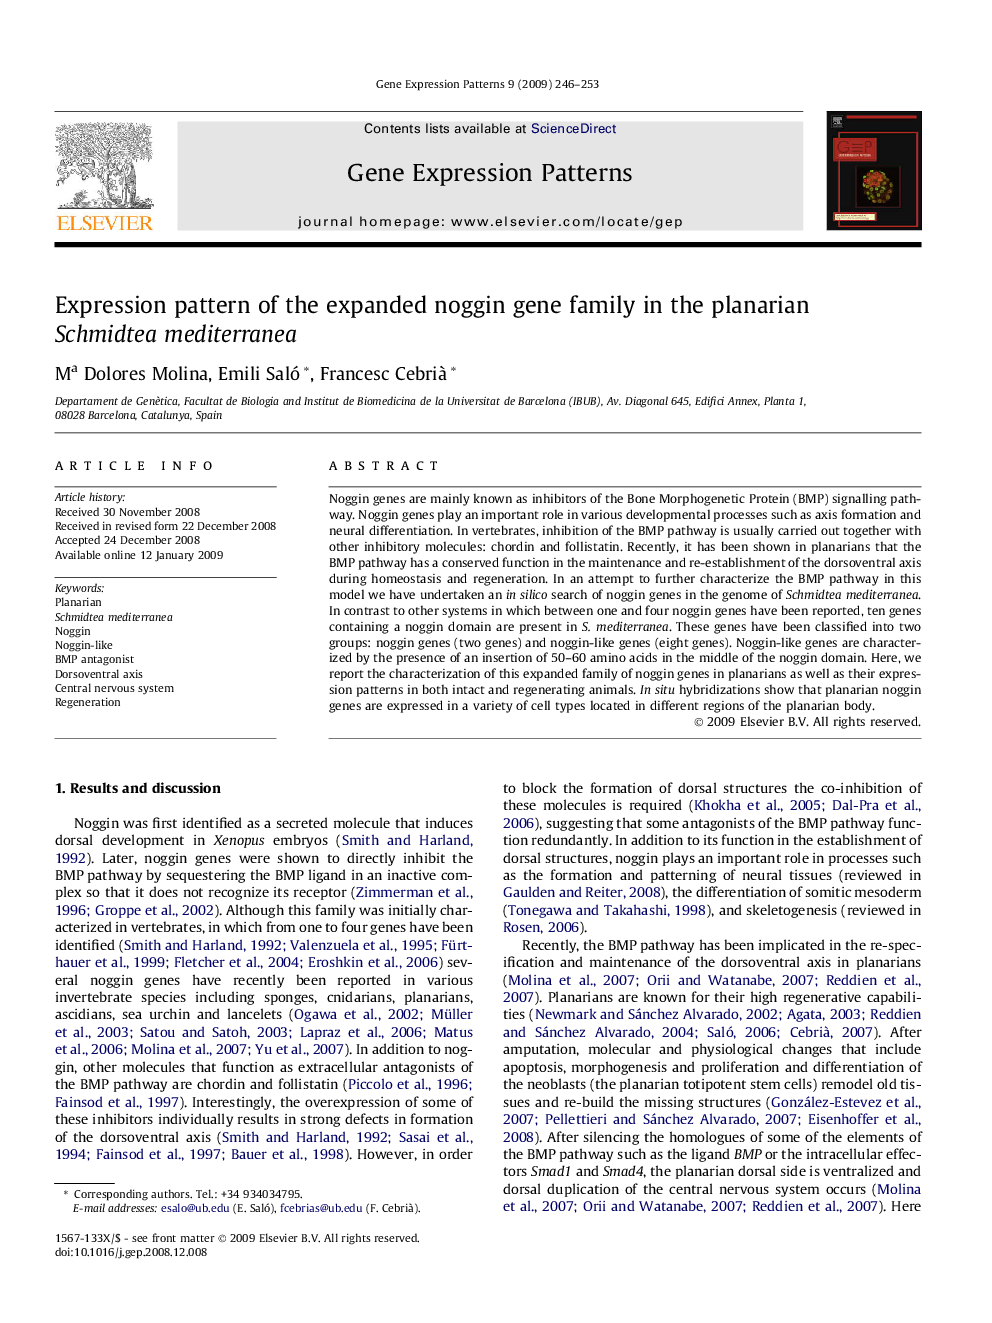 Expression pattern of the expanded noggin gene family in the planarian Schmidtea mediterranea